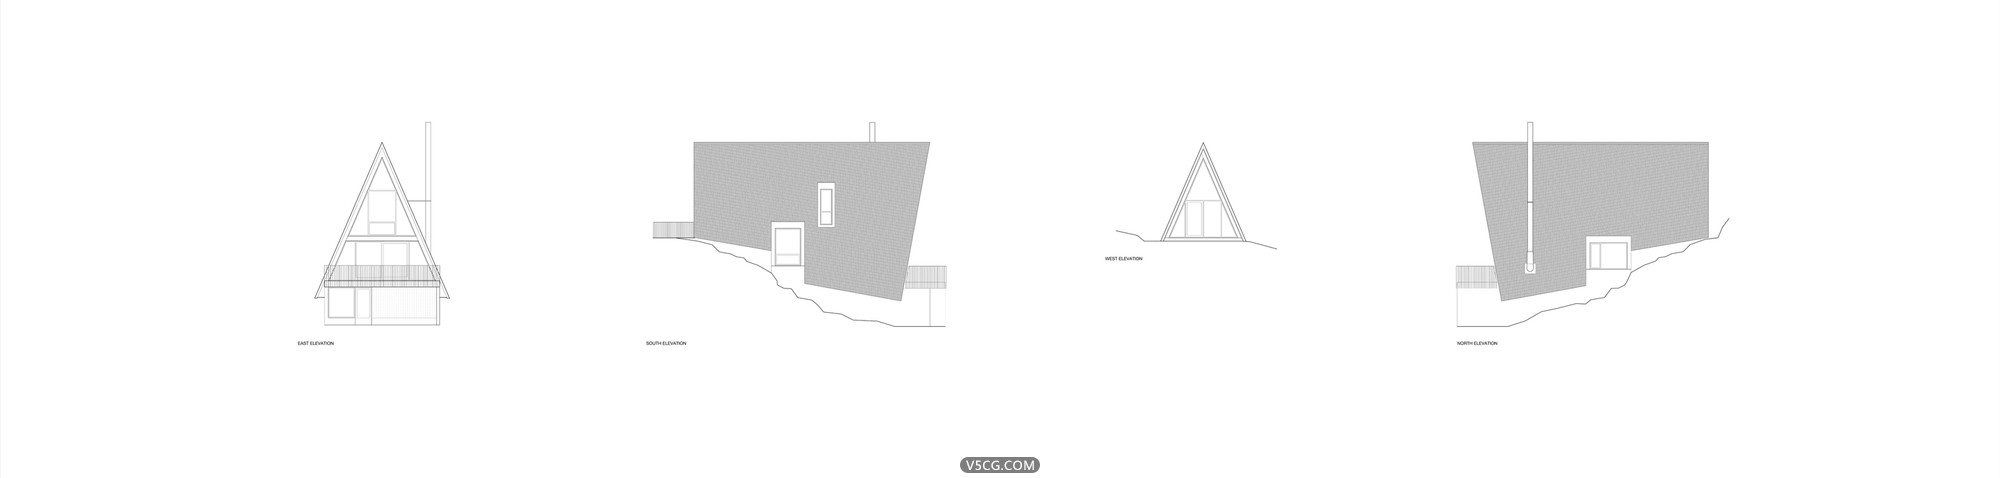 Scott-and-Scott-Architects--Whistler-Cabin-Elevations.jpg